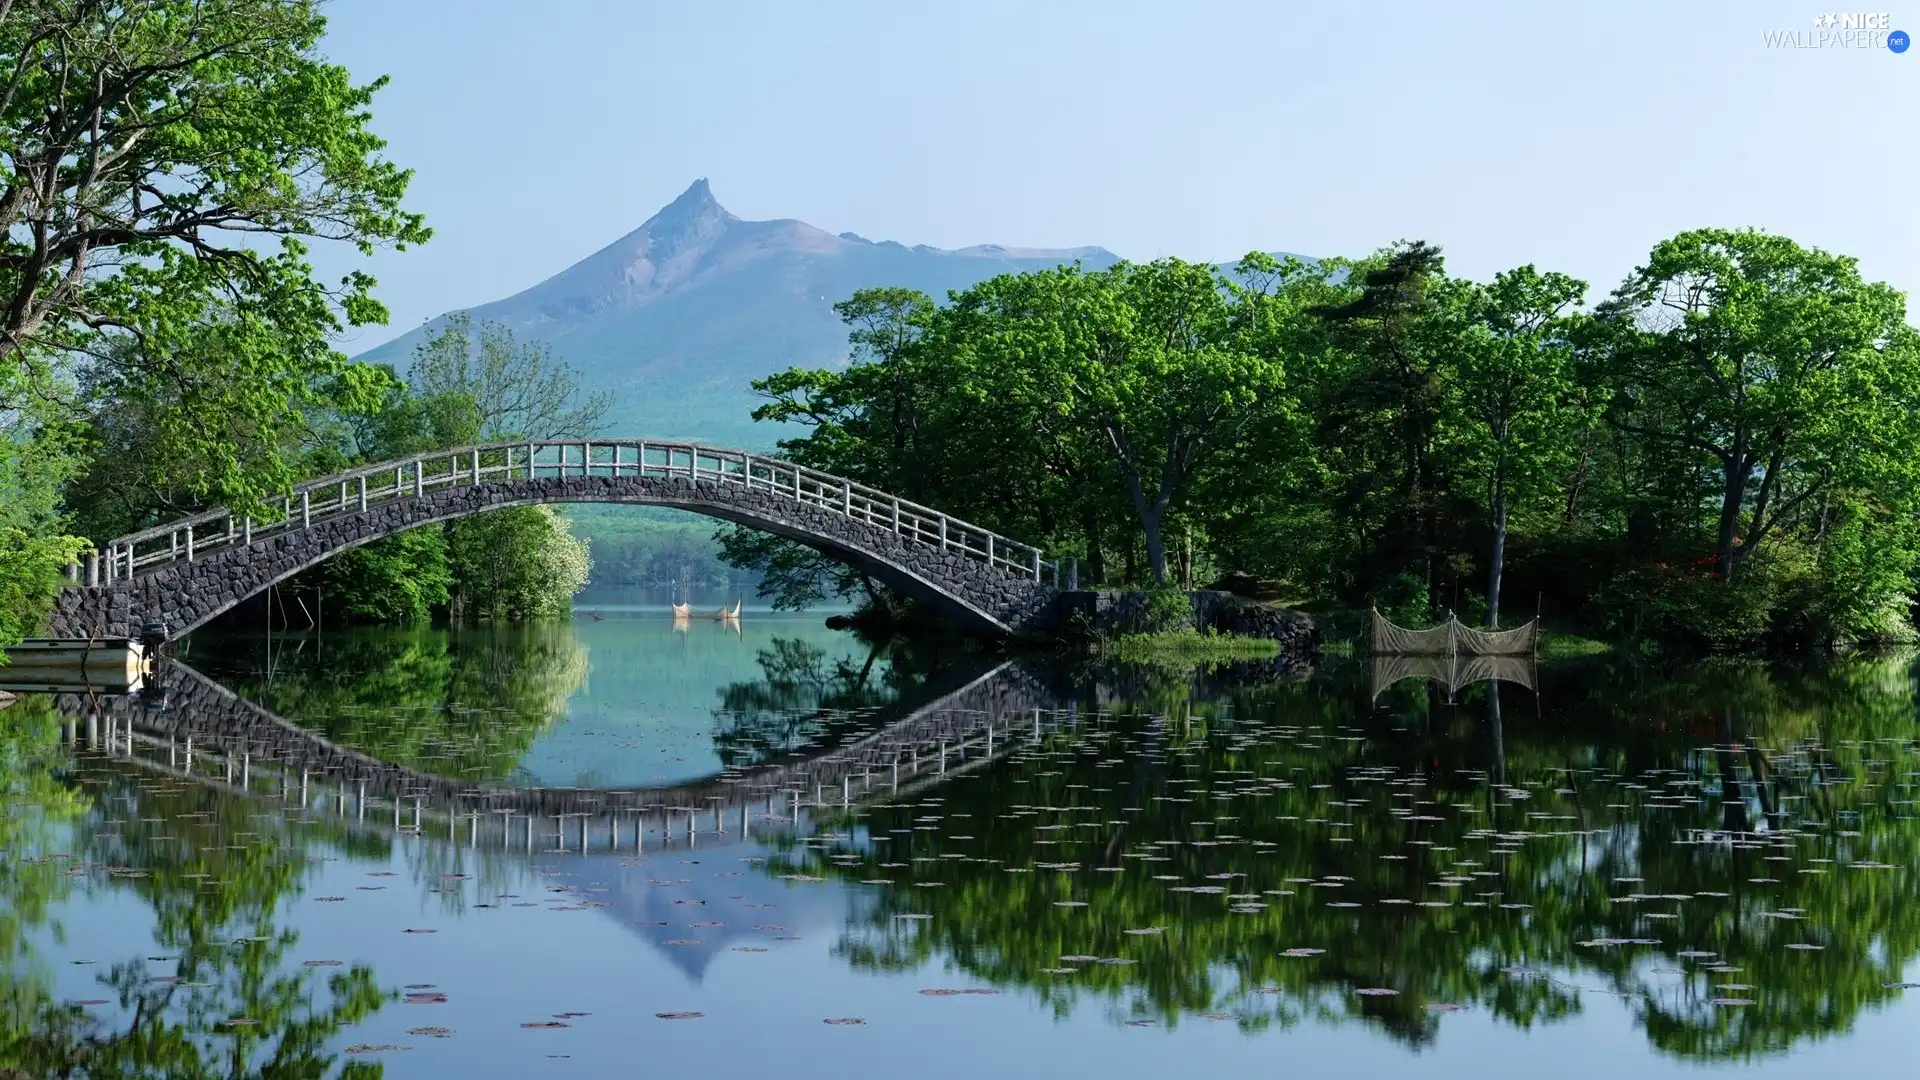 trees, bridges, mountains, Japan, viewes, water